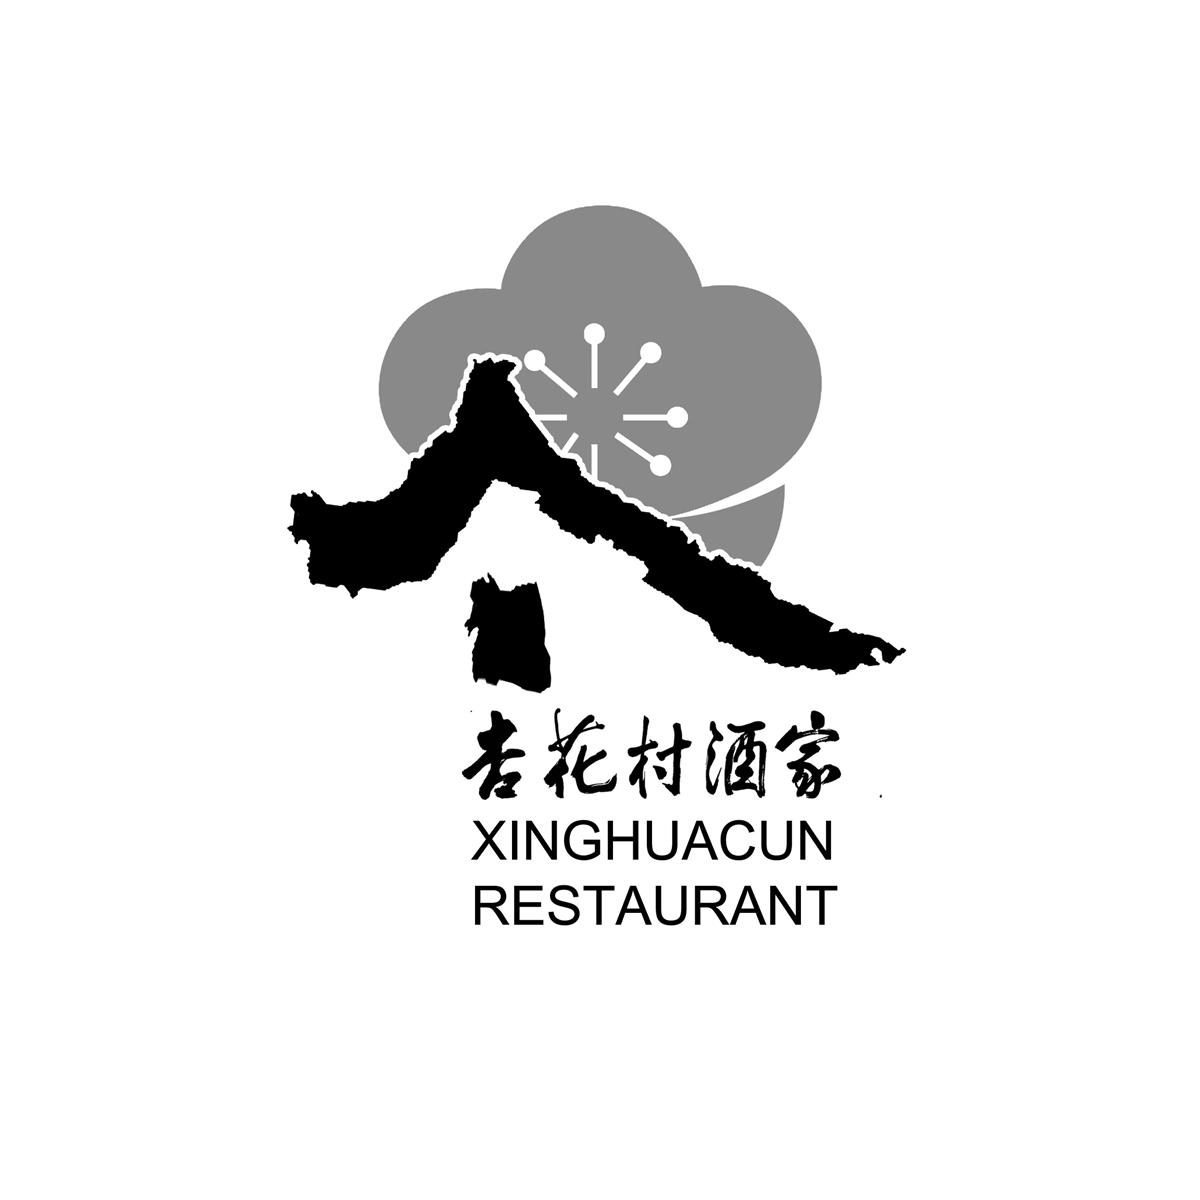 杏花村酒家 xinghuacun restaurant 商标公告